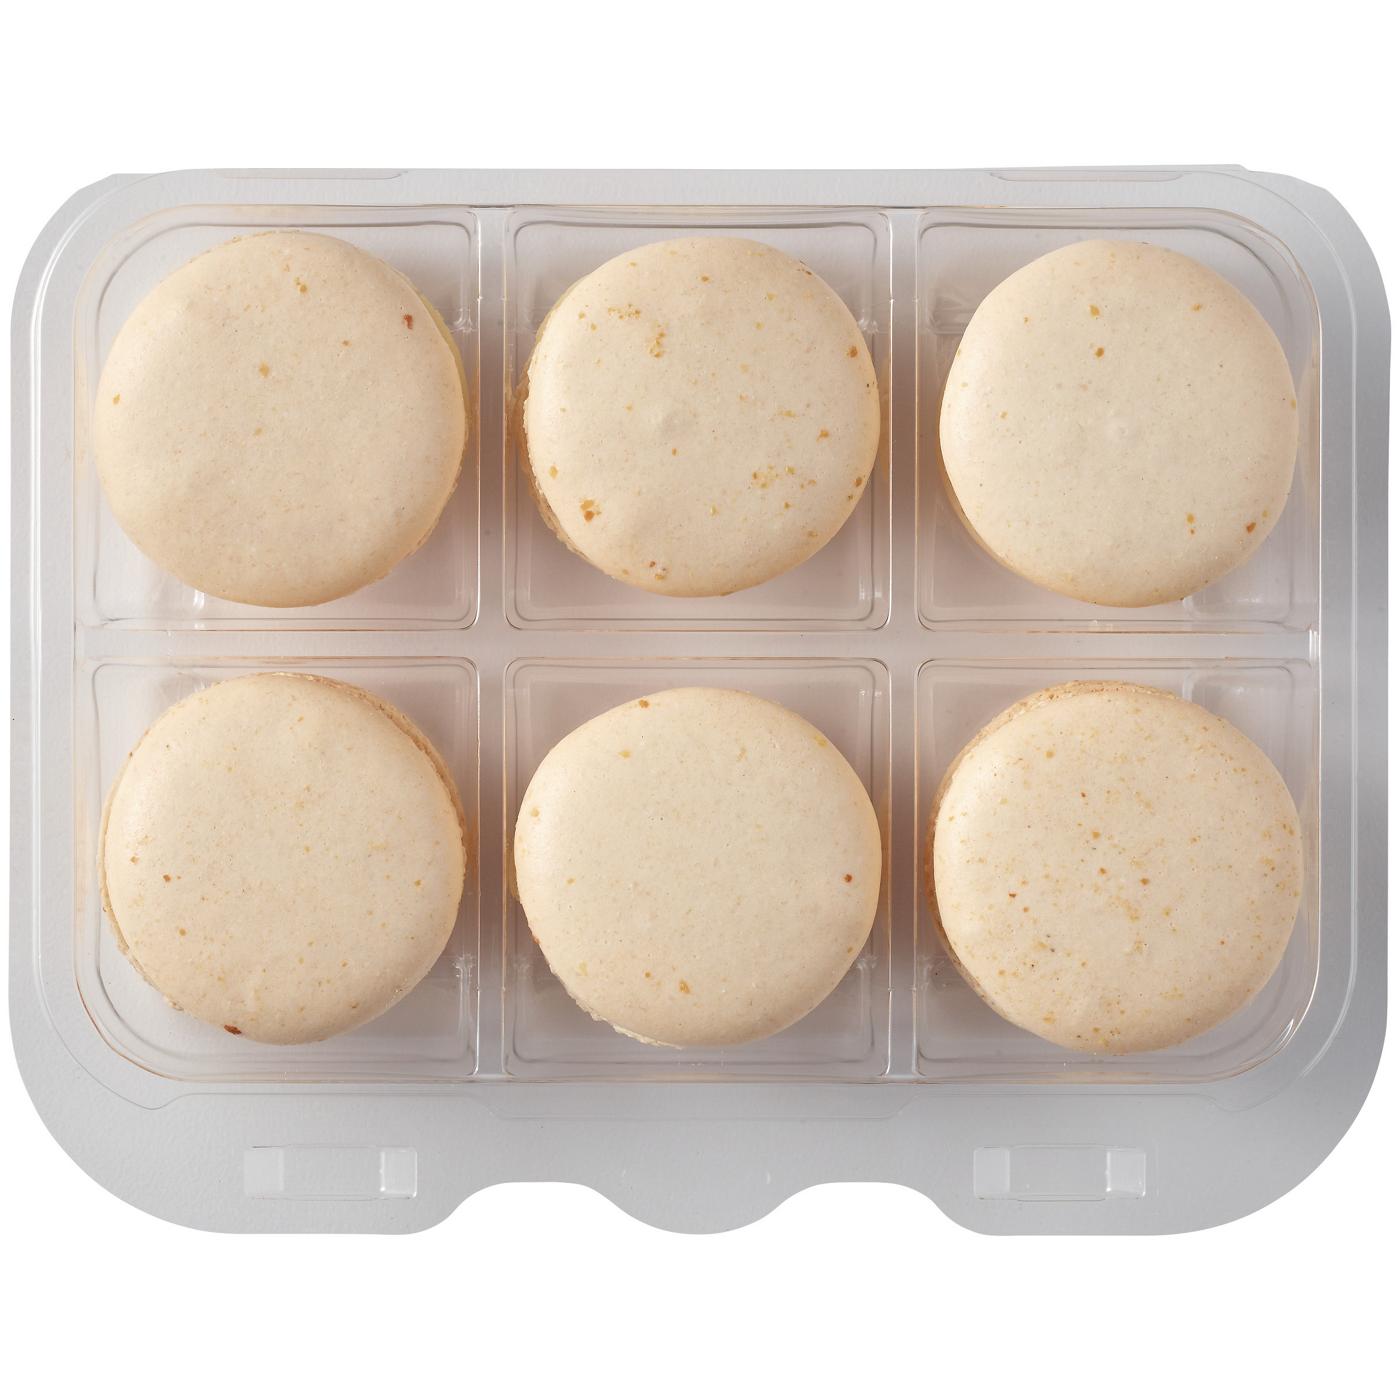 H-E-B Bakery Almond Macaron Cookies; image 1 of 3